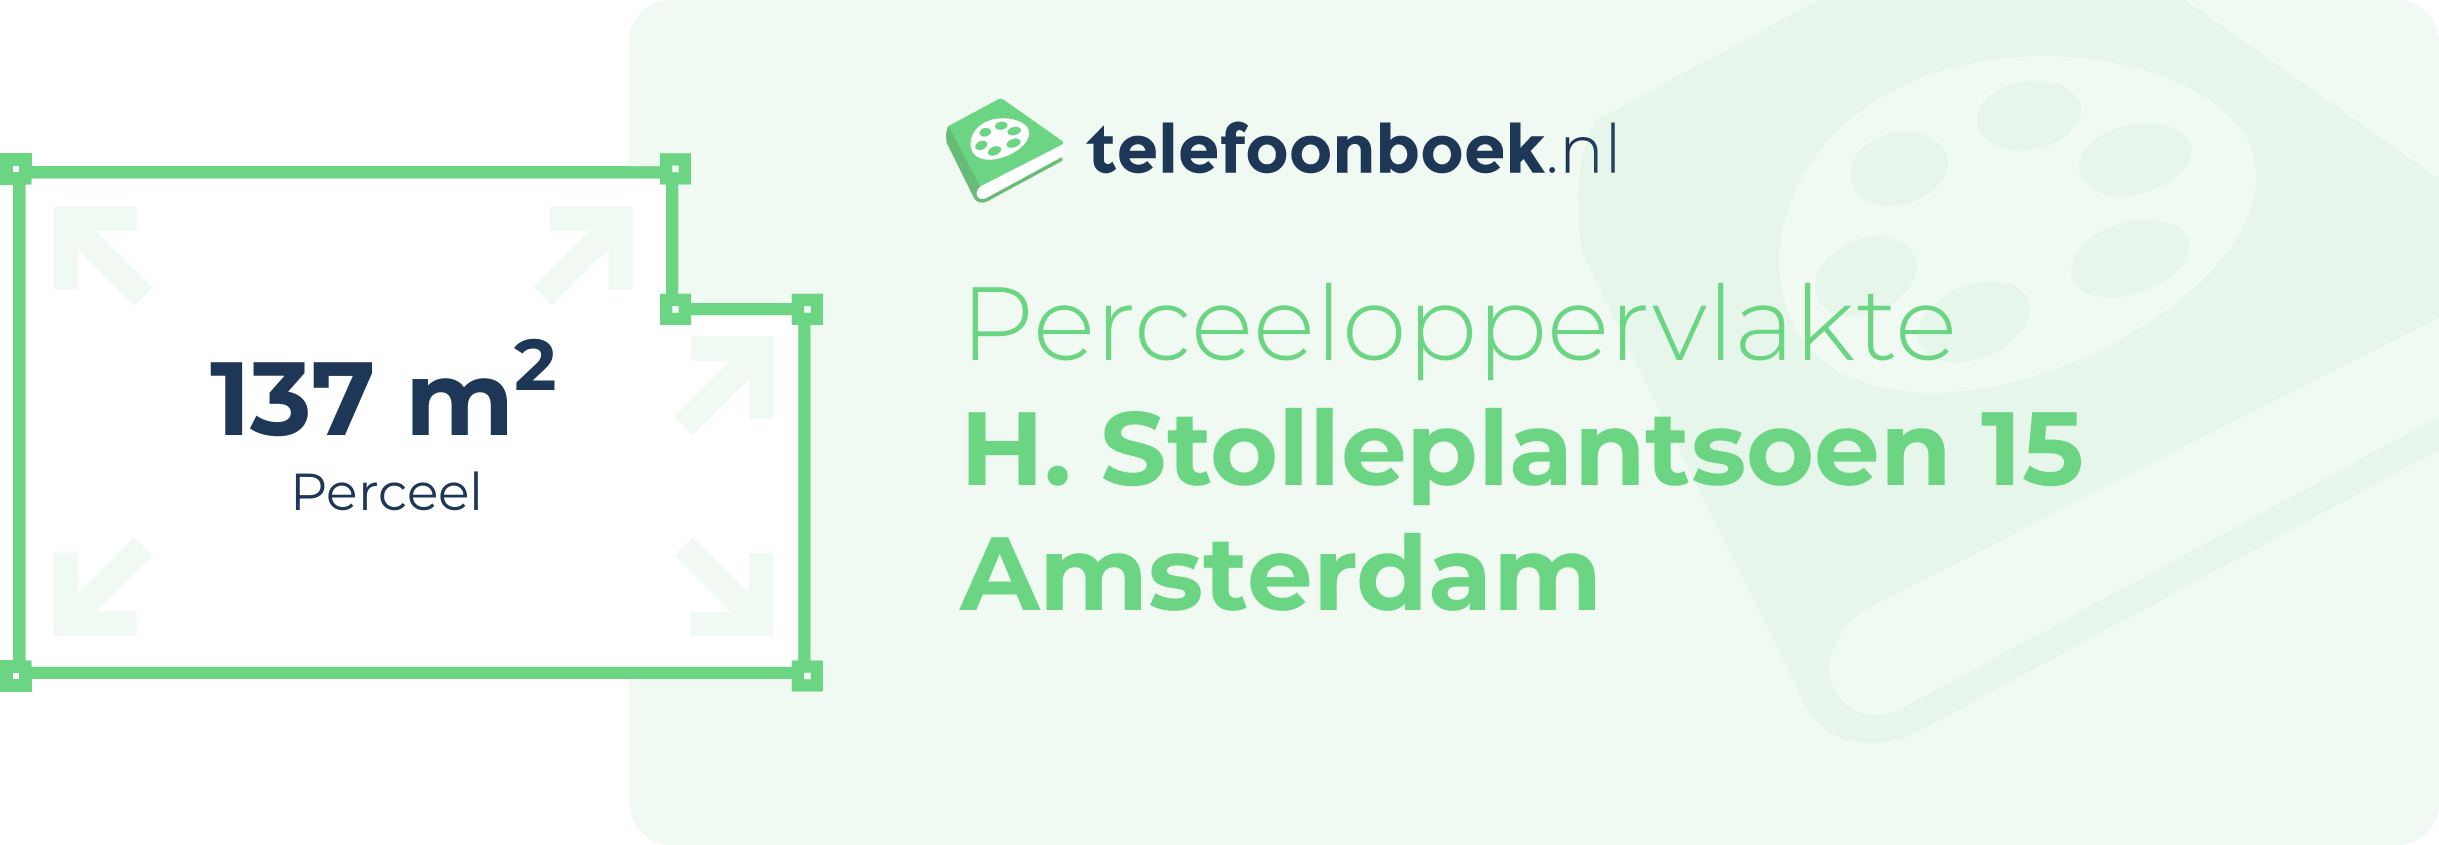 Perceeloppervlakte H. Stolleplantsoen 15 Amsterdam